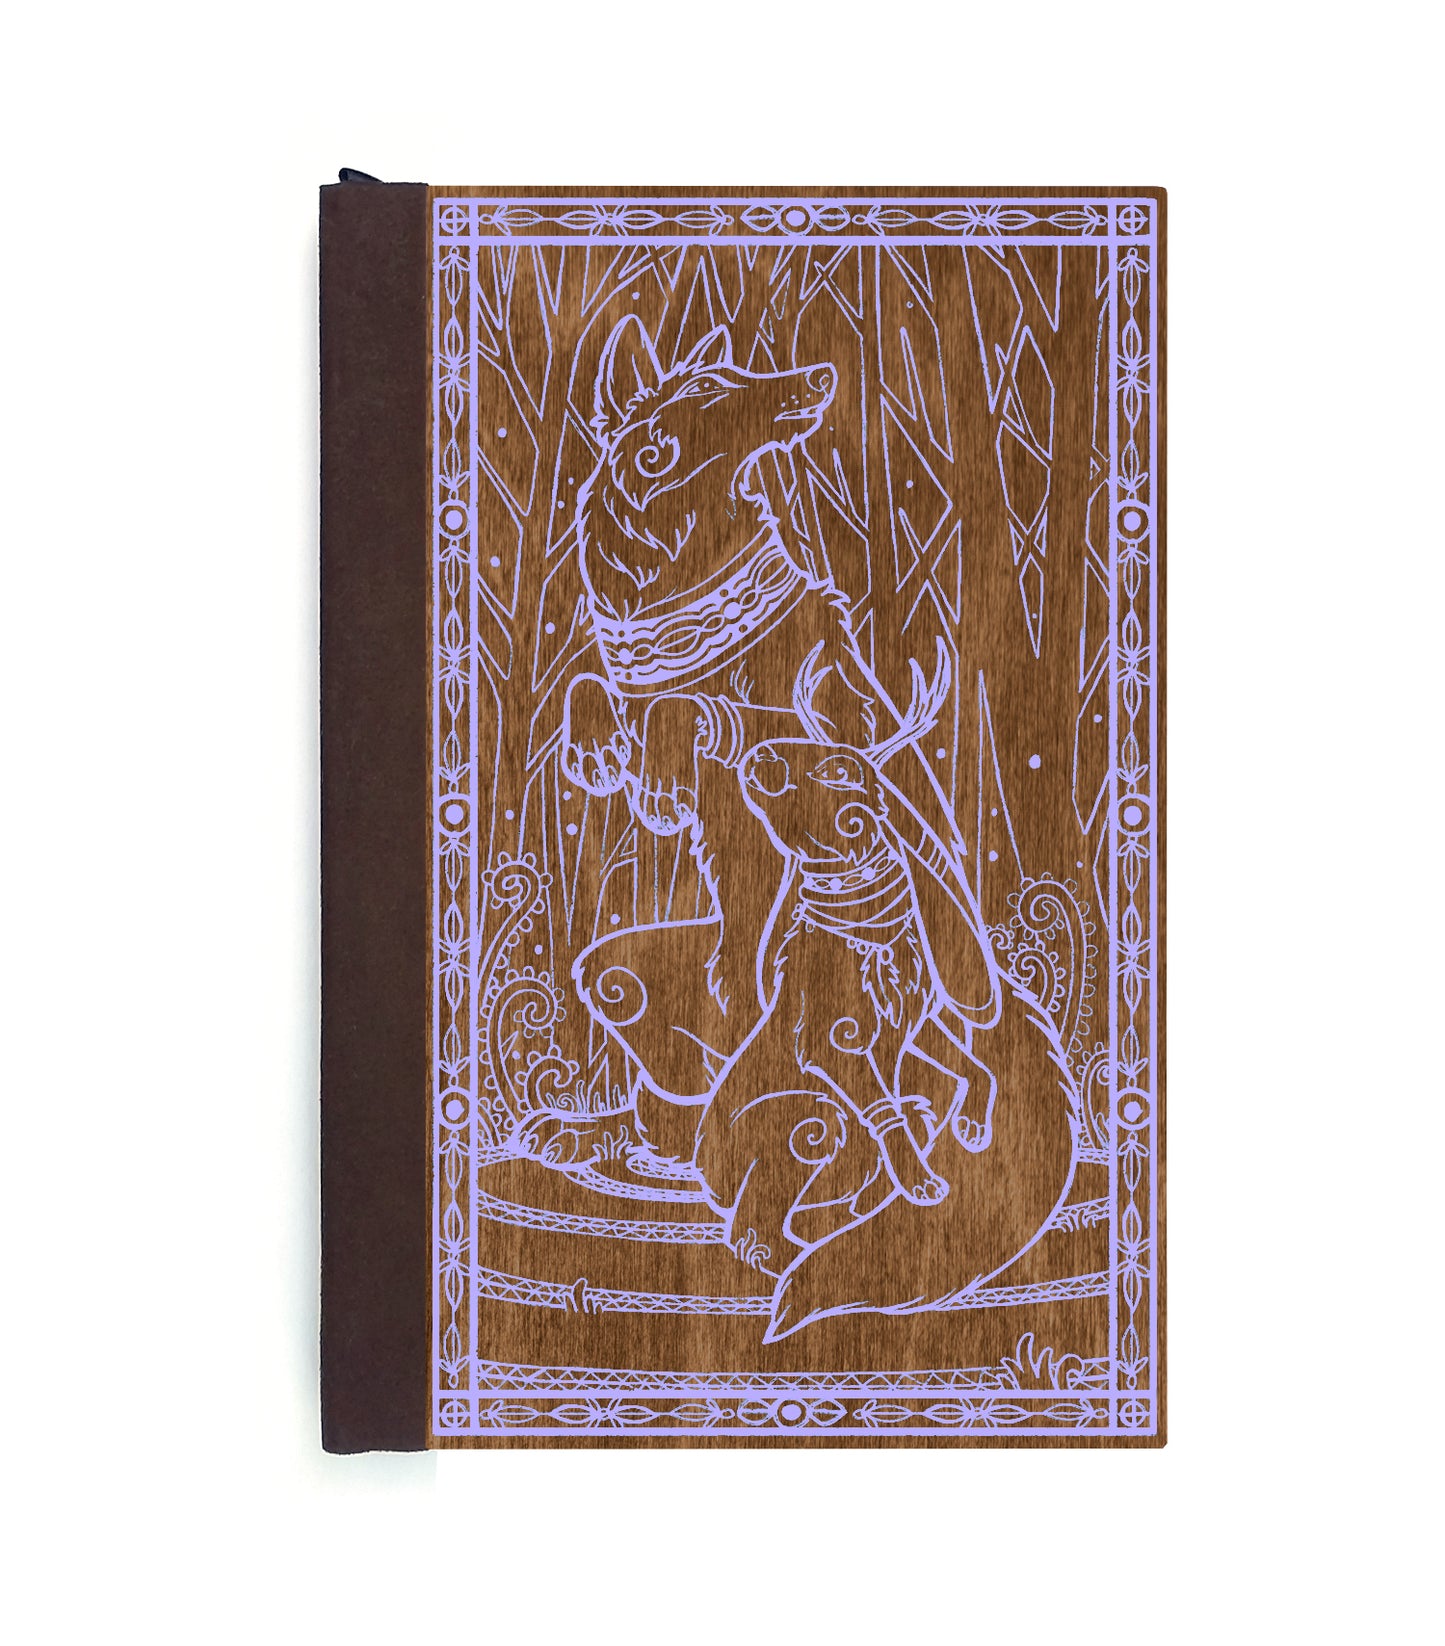 Jackalope & Wolf Magnetic Wooden Journal, Brown & Lavender